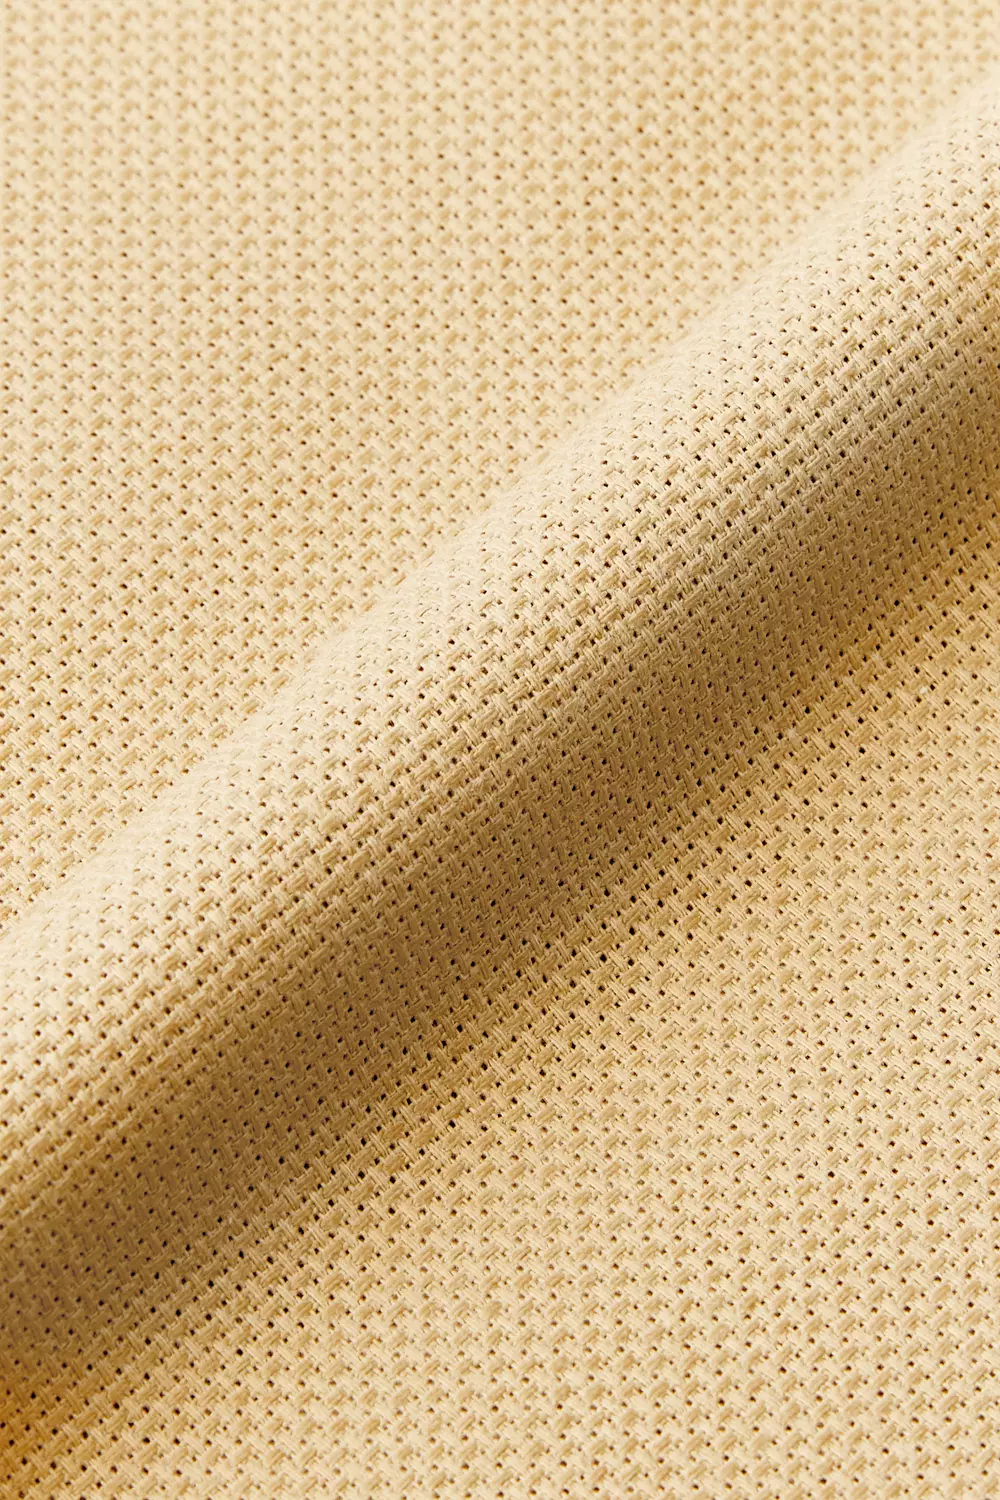 DMC / Charles Craft - 16 Count White Aida Fabric 20 x 24 inches